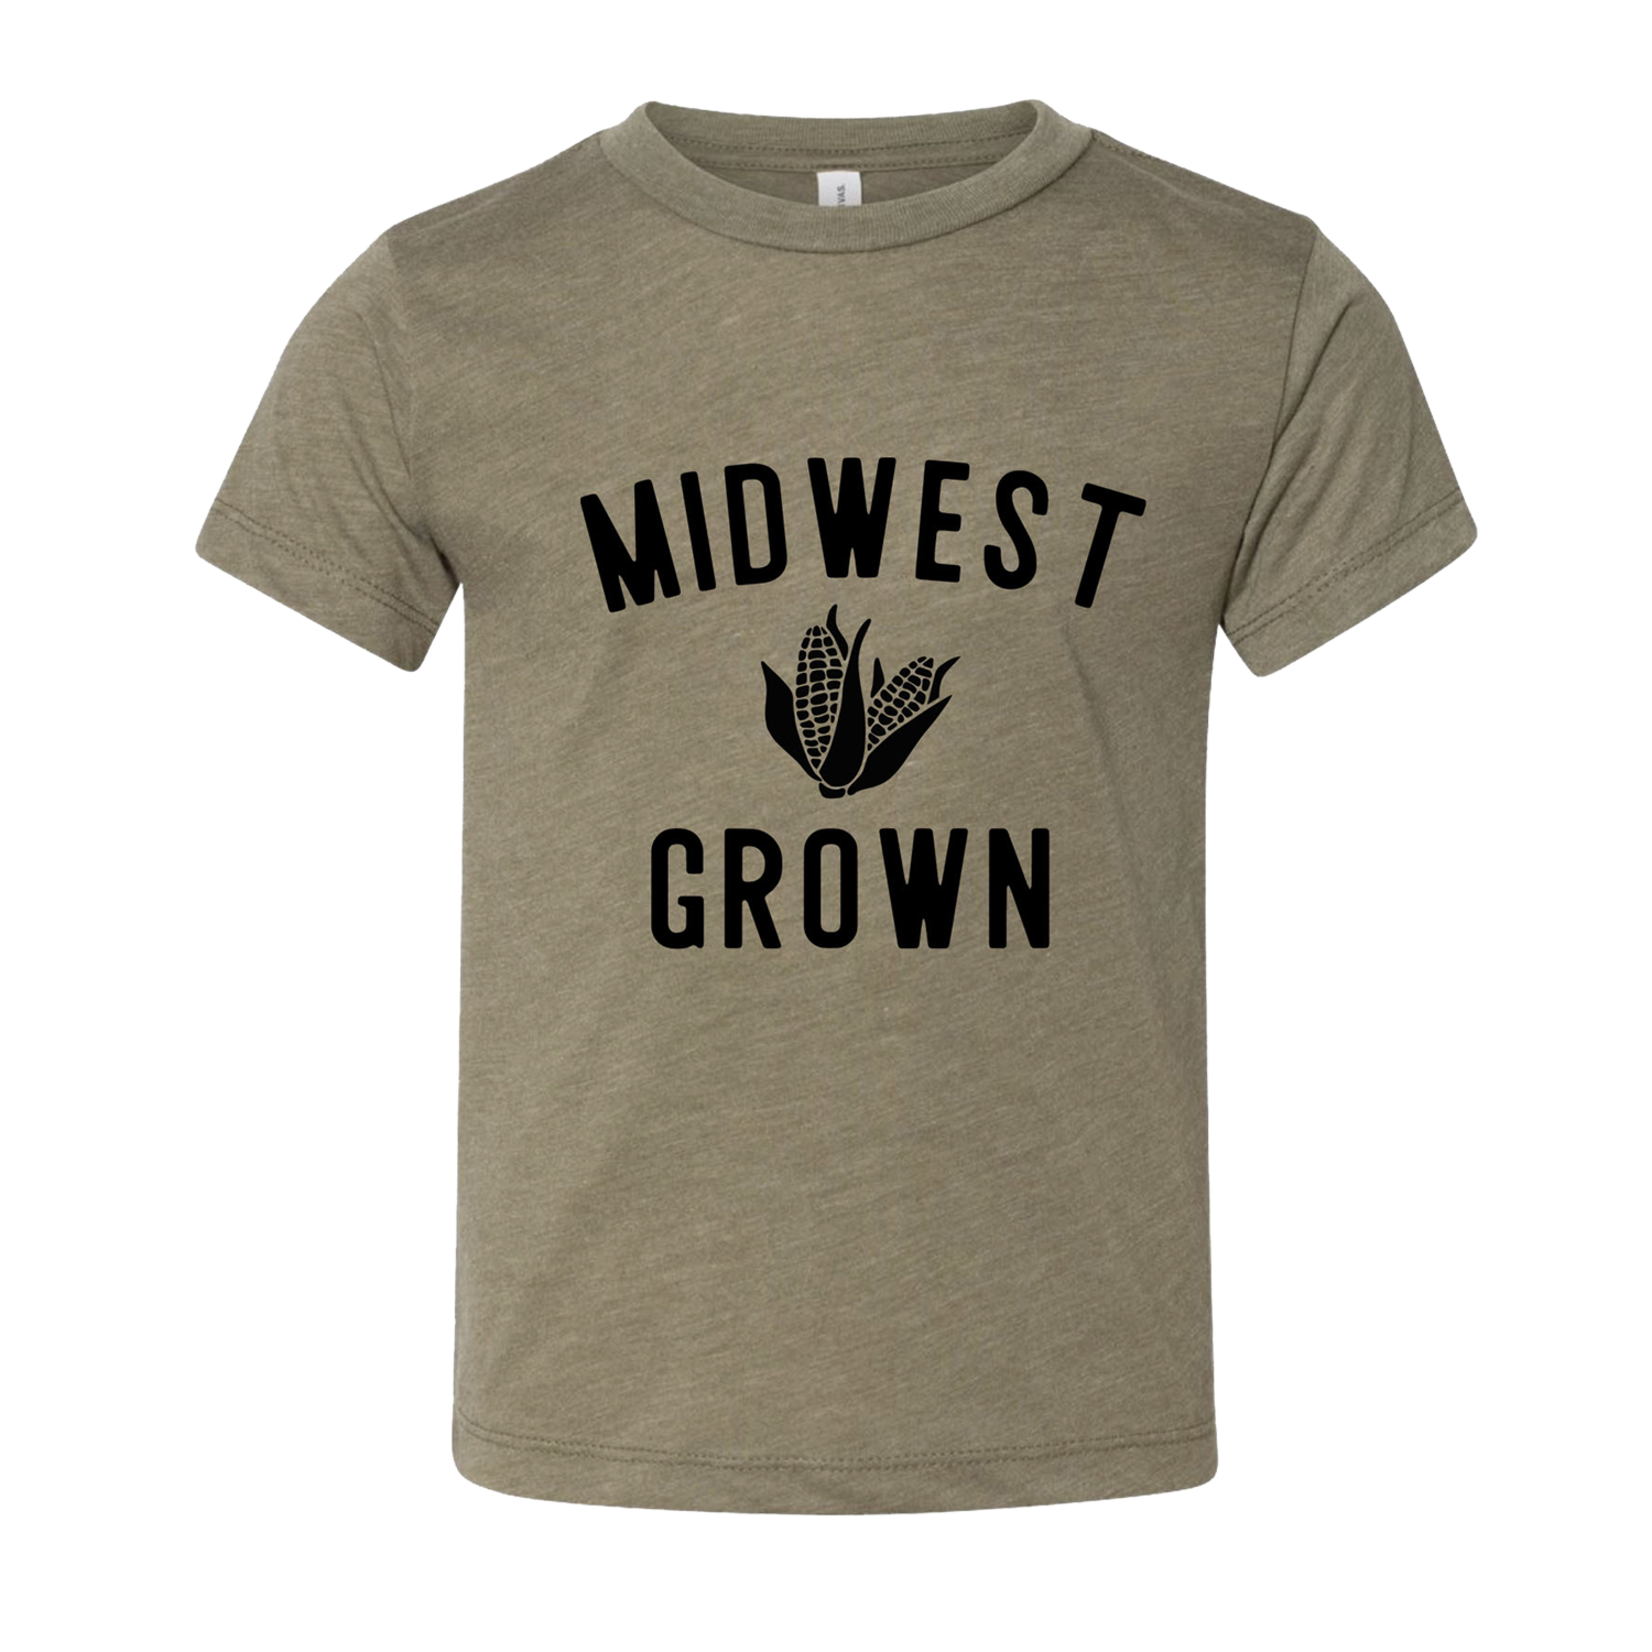 ‘Midwest Grown’ Child’s Tee & Onesie